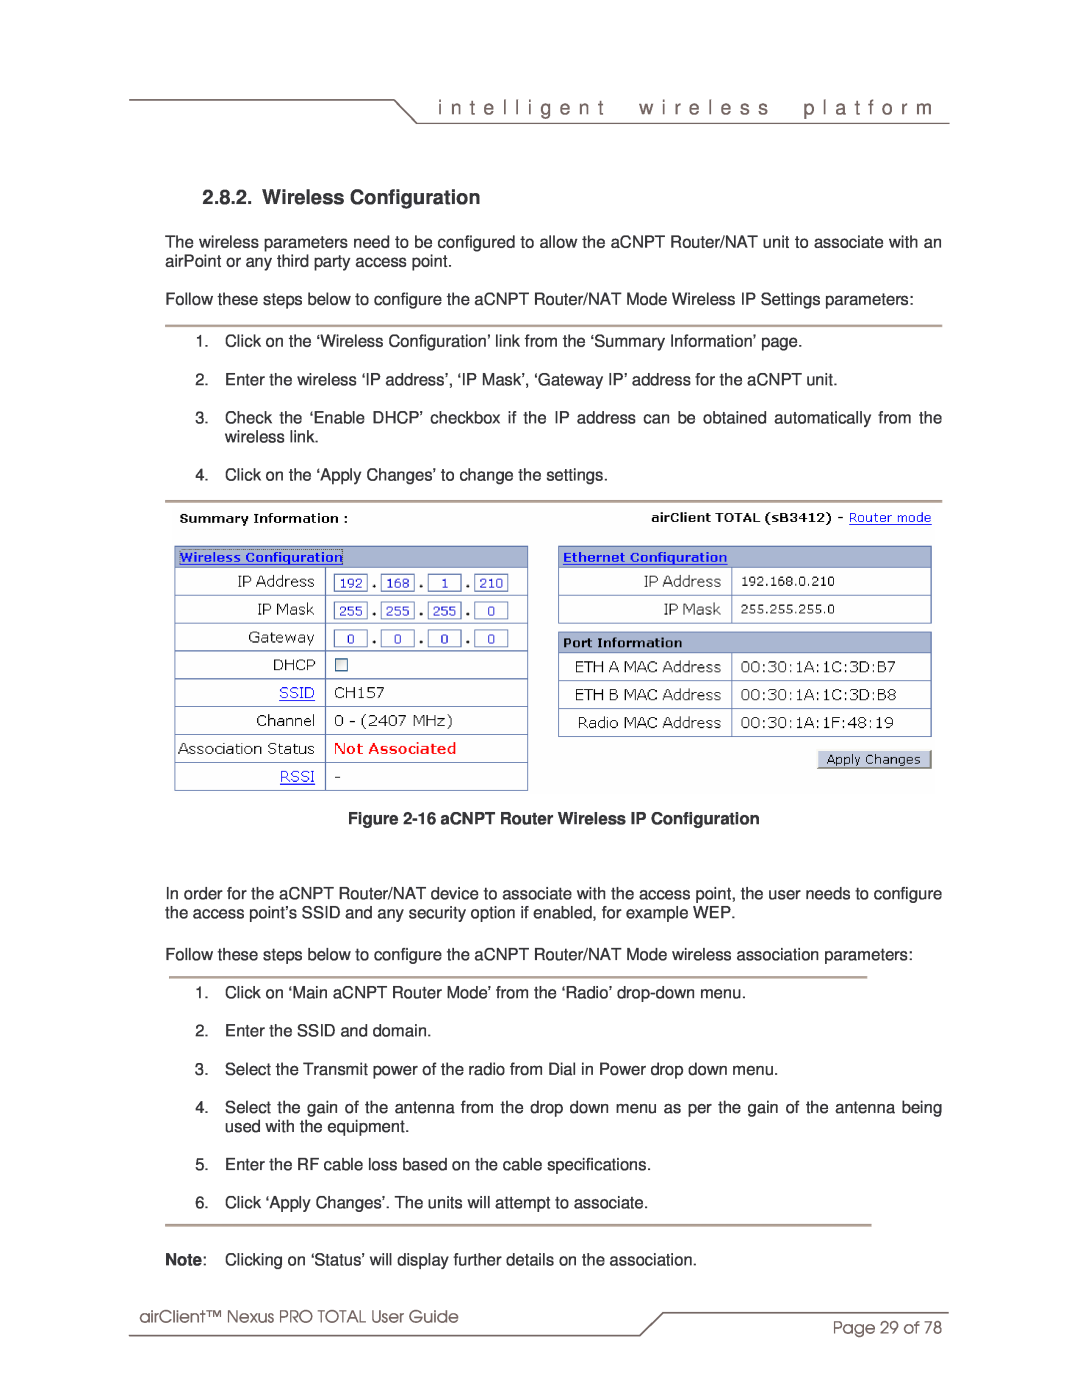 SmartBridges sB3412 manual Wireless Configuration, i n t e l l i g e n t, w i r e l e s s, p l a t f o r m, Page 29 of 